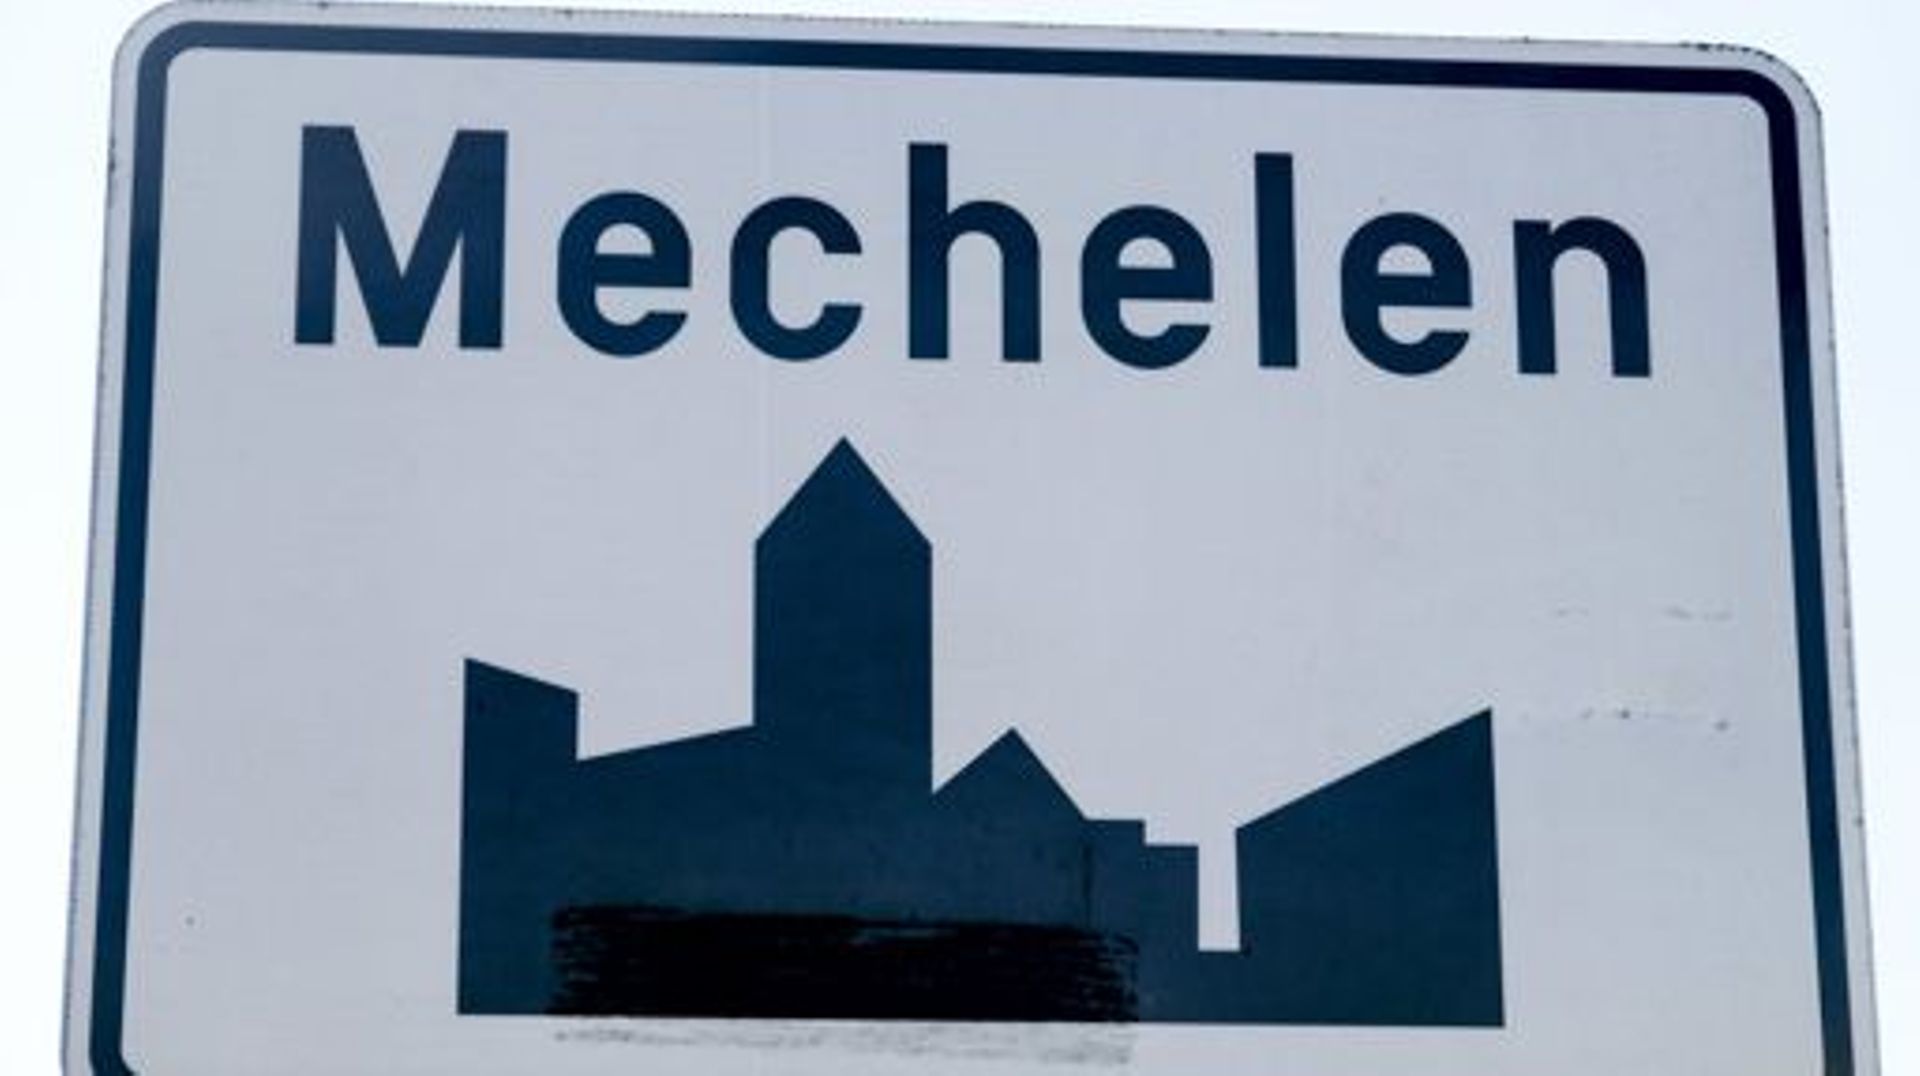 Illustration shows the name of the Mechelen municipality on a road sign, Friday 14 September 2018. BELGA PHOTO DIRK WAEM